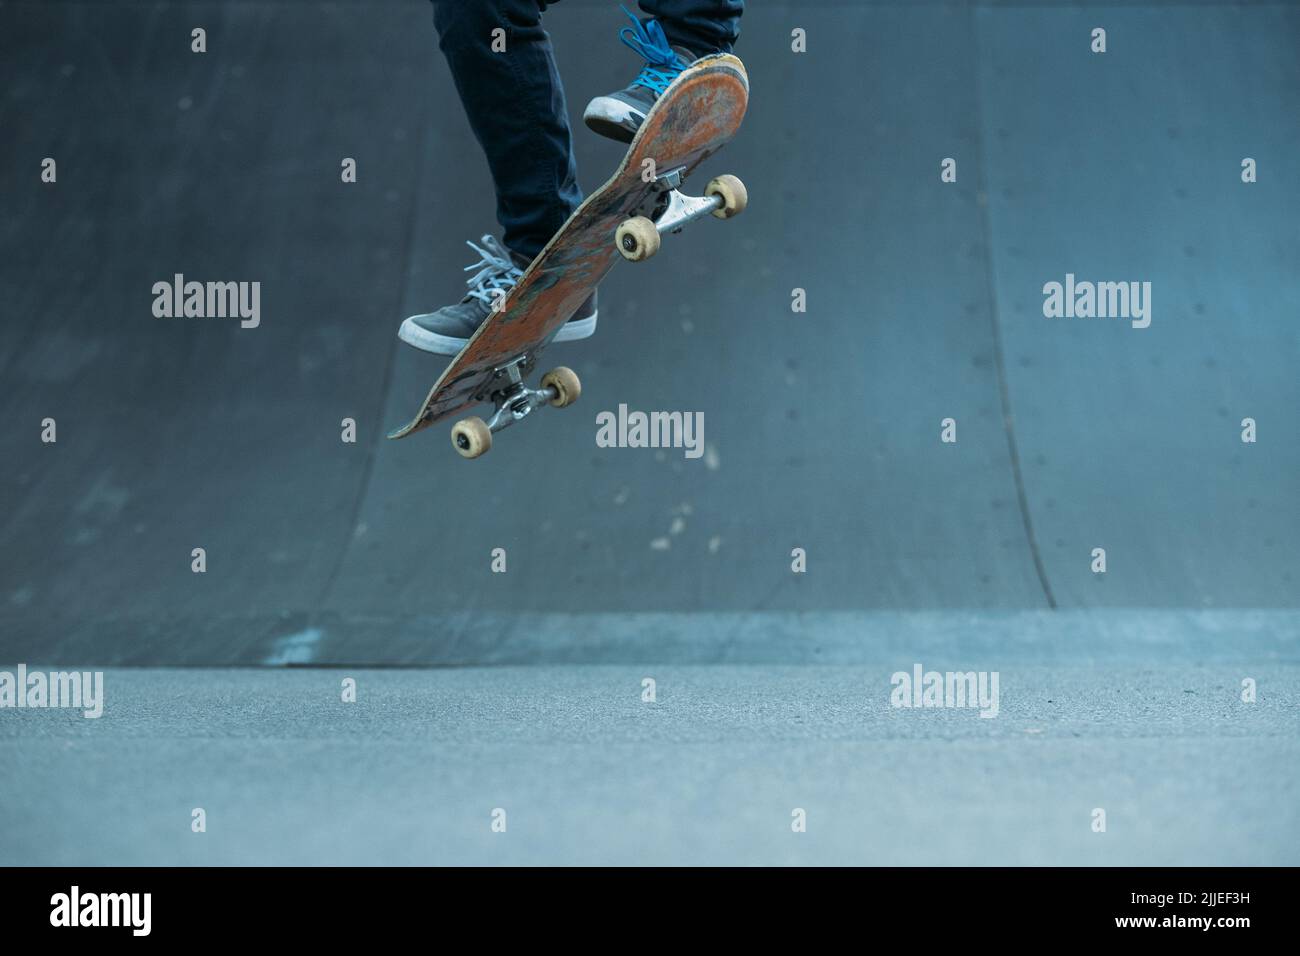 Skateboarder Action extremer Lifestyle Ramp Trick Stockfoto